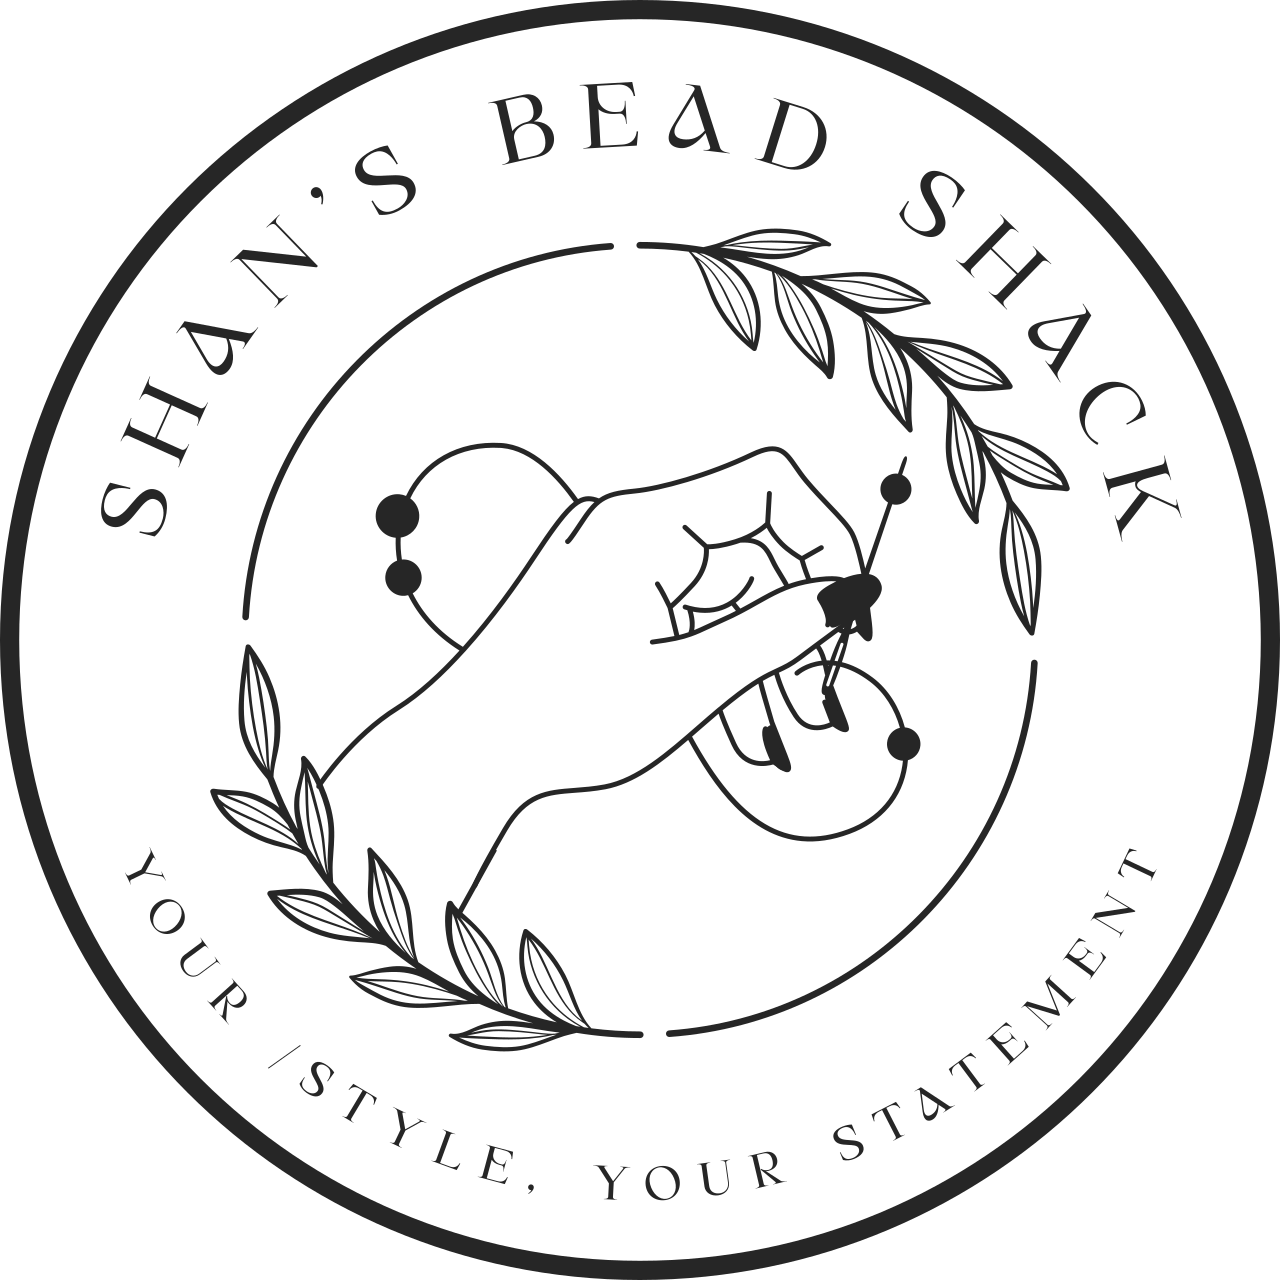 Shan’s Bead Shack's logo